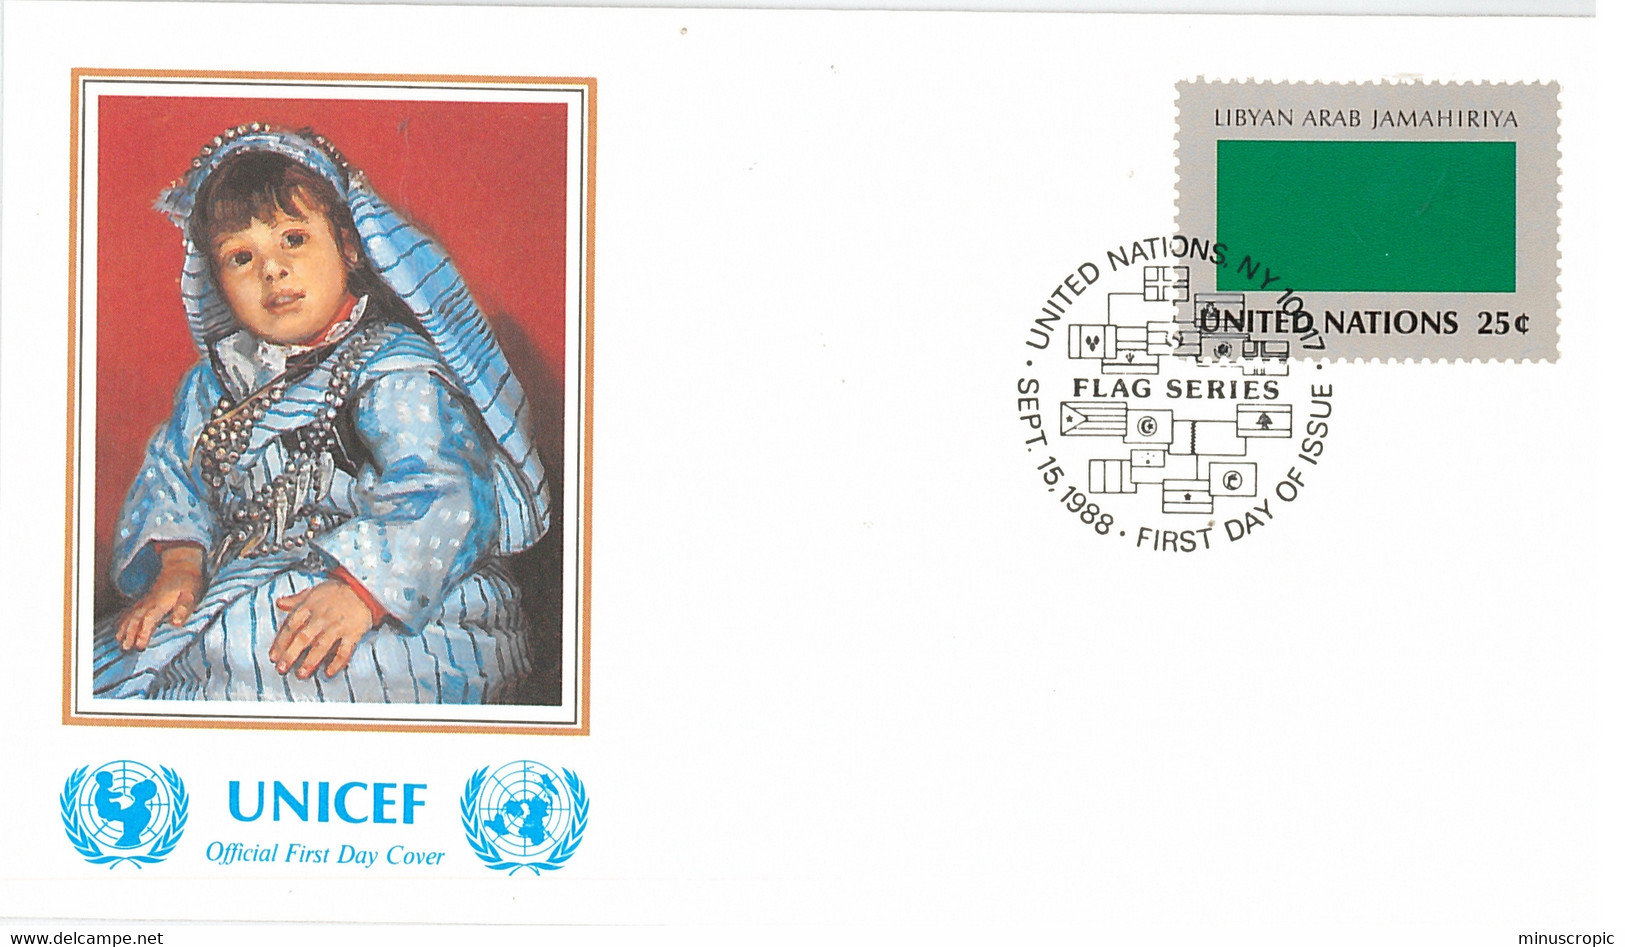 Enveloppe FDC United Nations - UNICEF - Flag Series 8/88 - Libyan Arab Jamahiriya - 1988 - Storia Postale